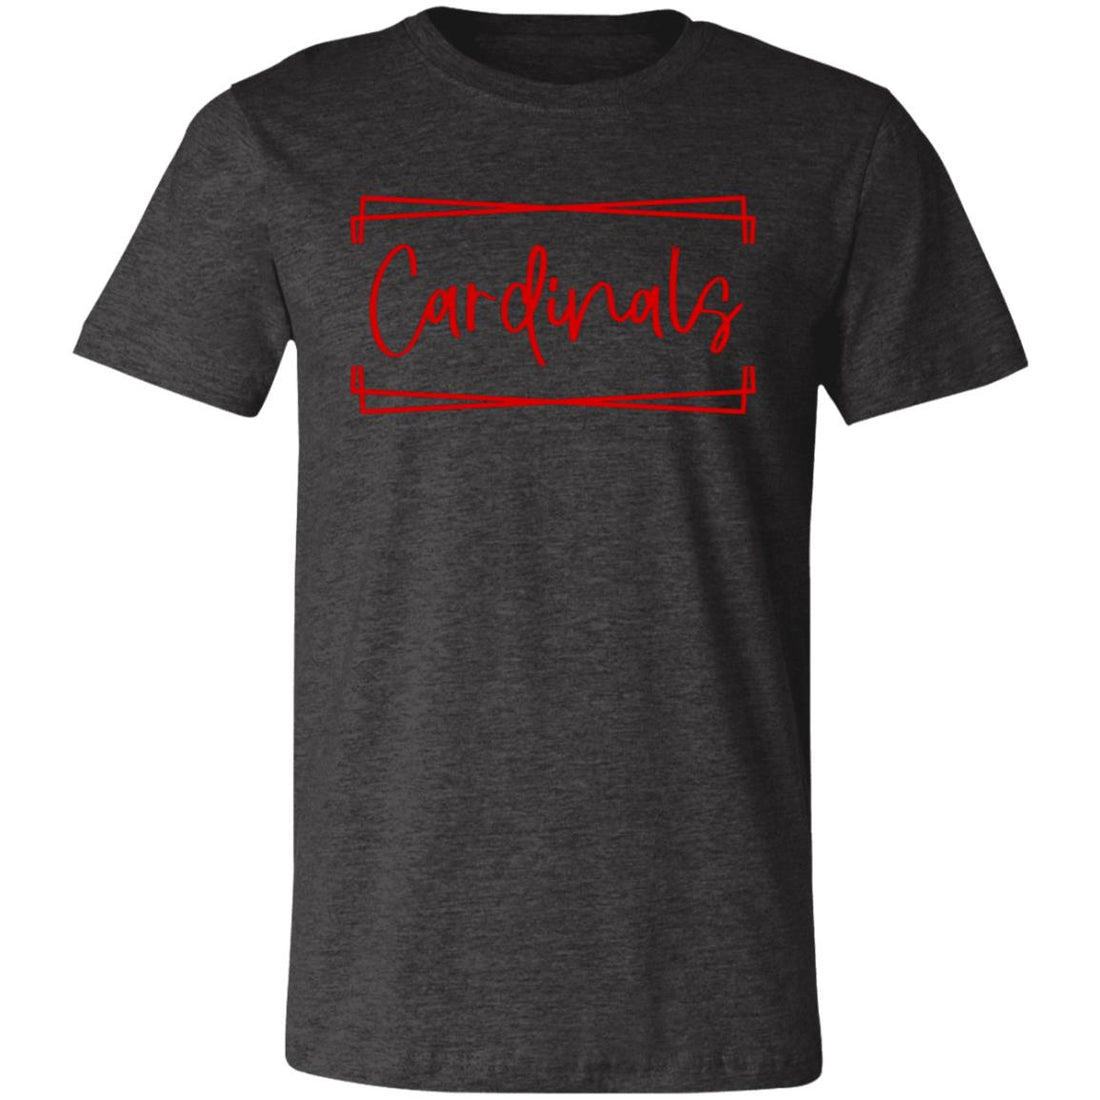 Cardinals Box T-Shirt - T-Shirts - Positively Sassy - Cardinals Box T-Shirt